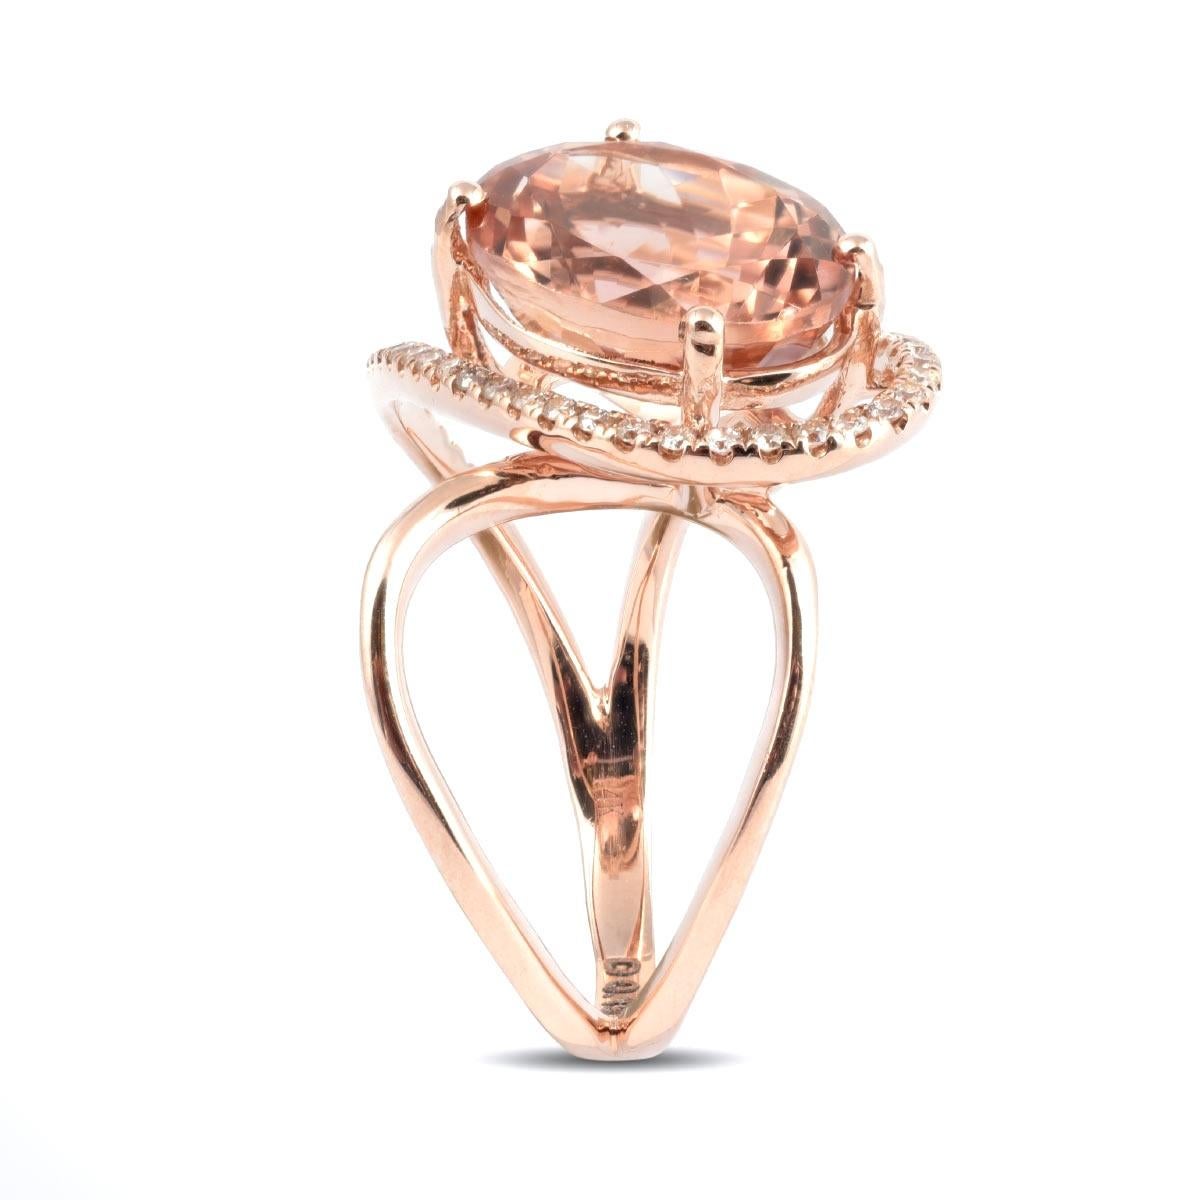 Mixed Cut 4.66 Carats Orange-Pink Tourmaline Diamonds set in 14K Rose Gold Ring For Sale